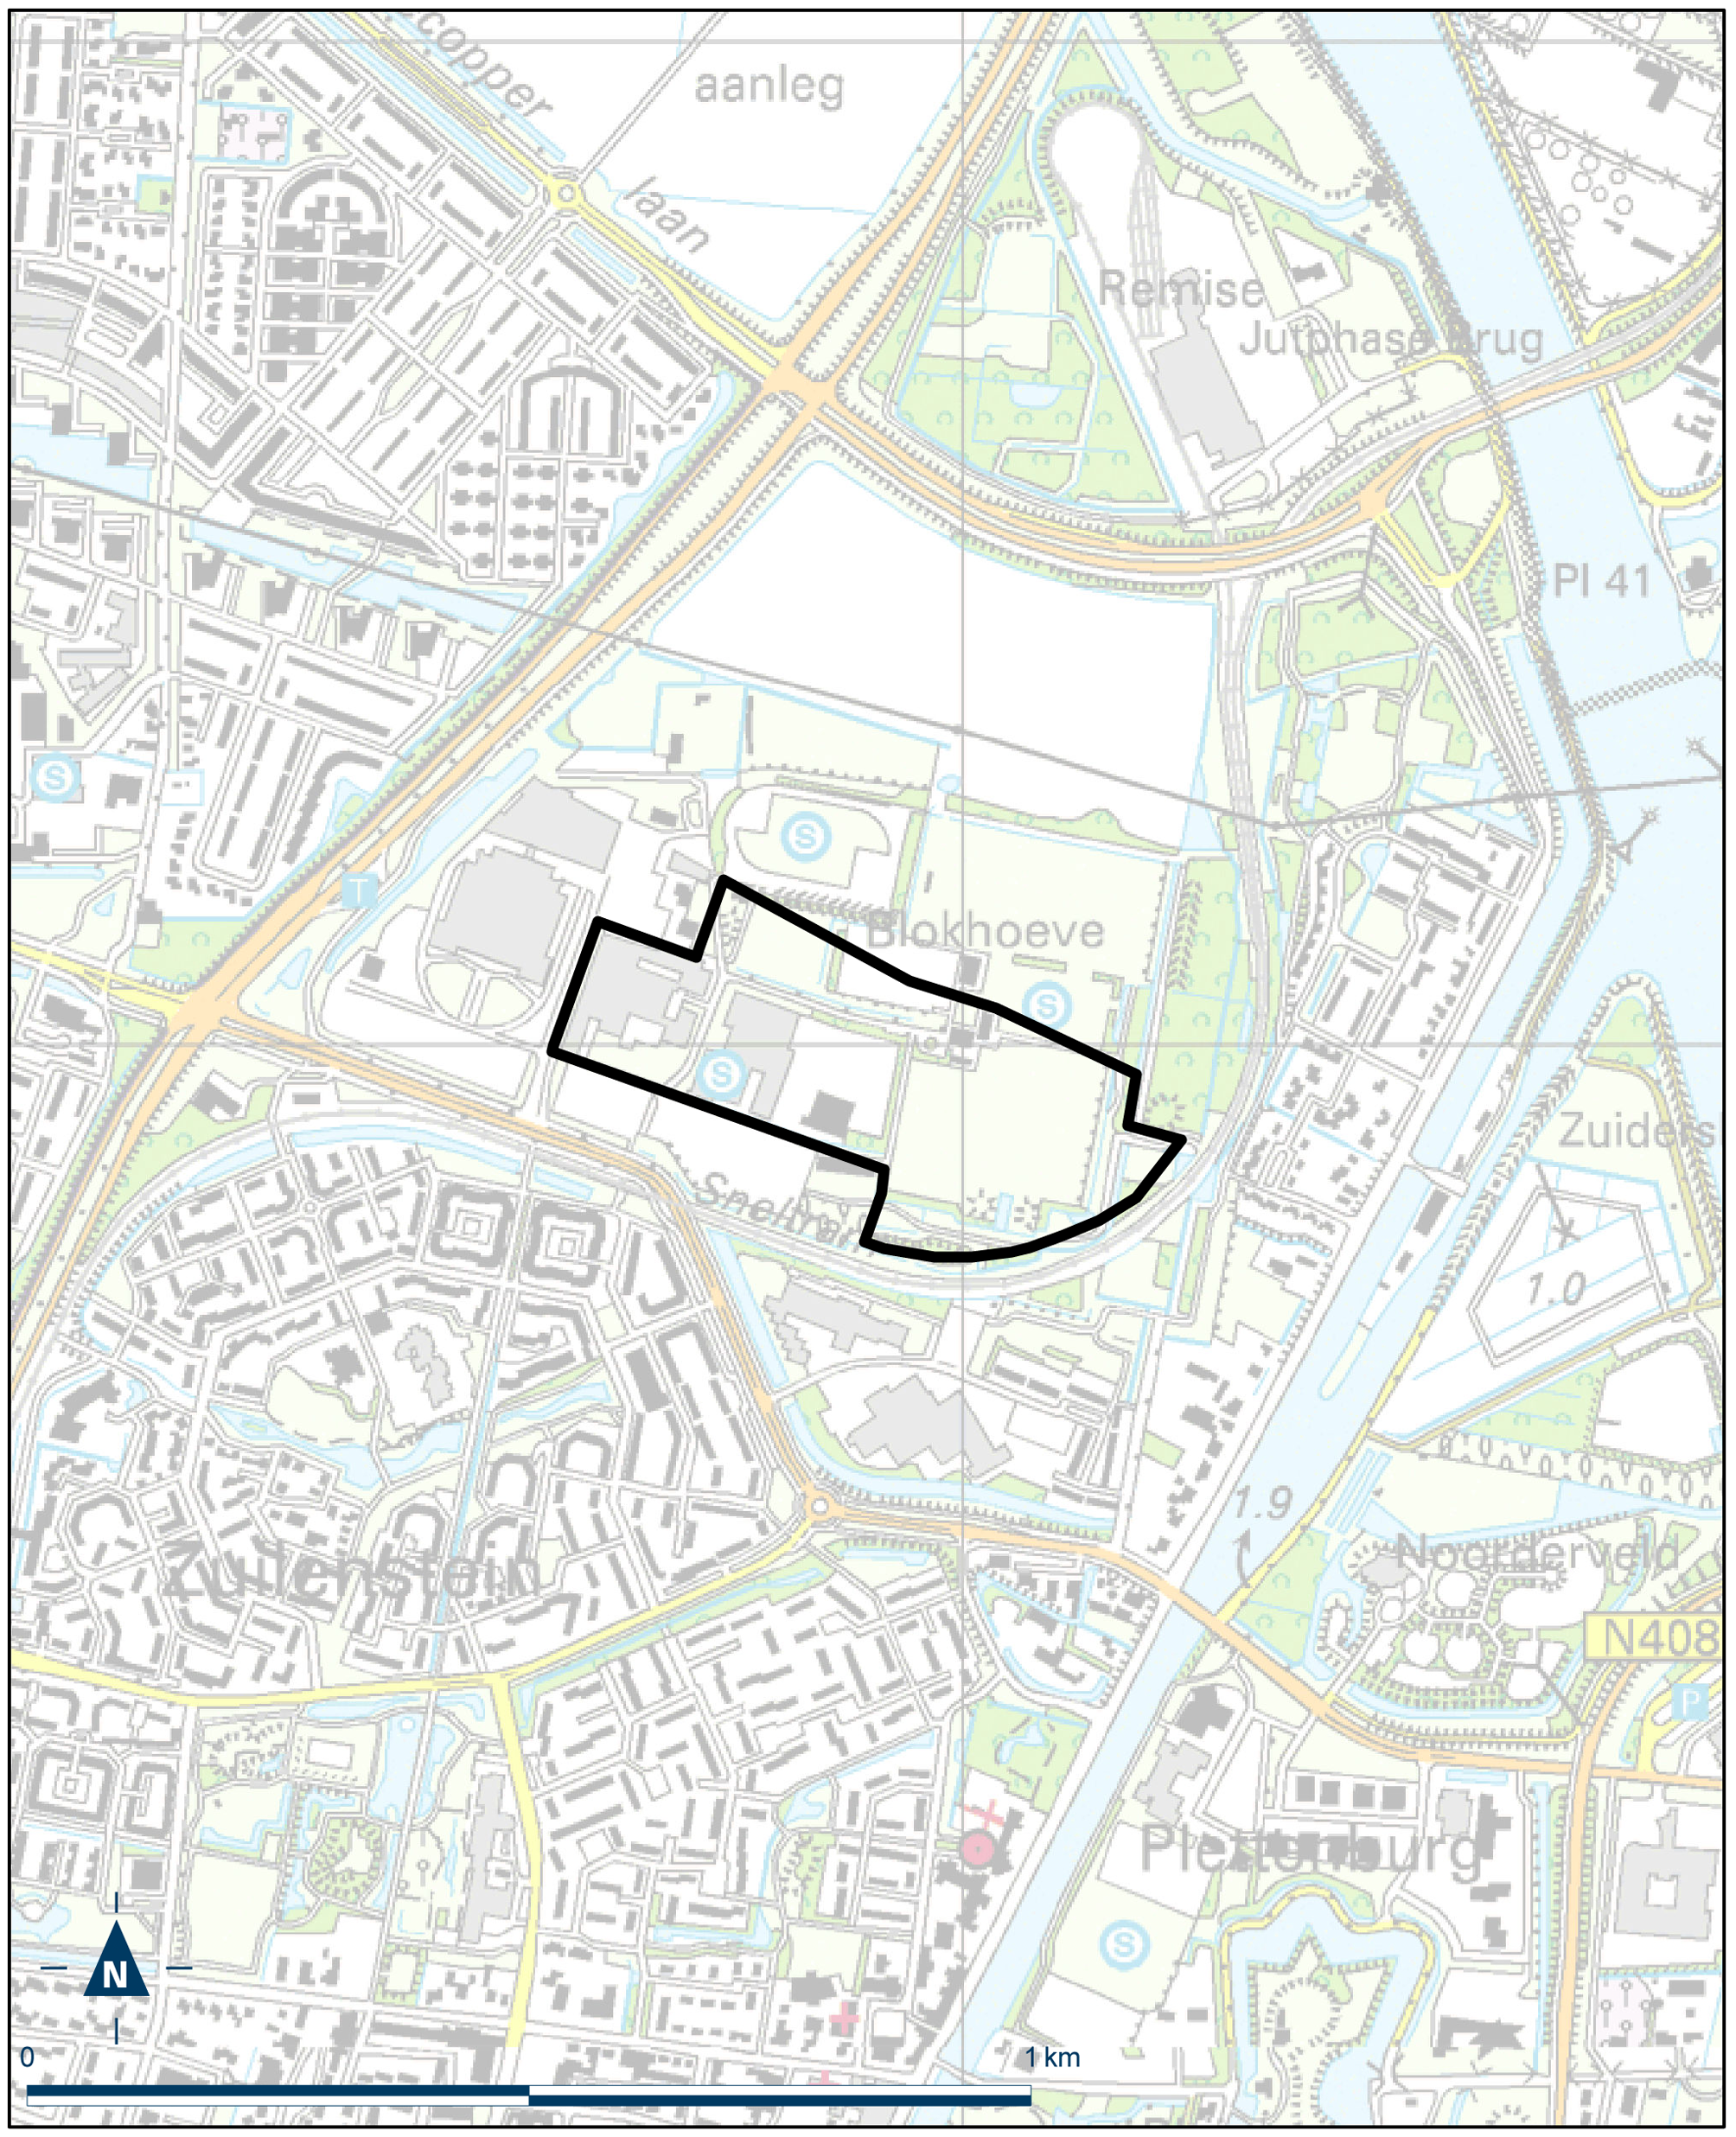 Kaart Nieuwegein – Blokhoeve